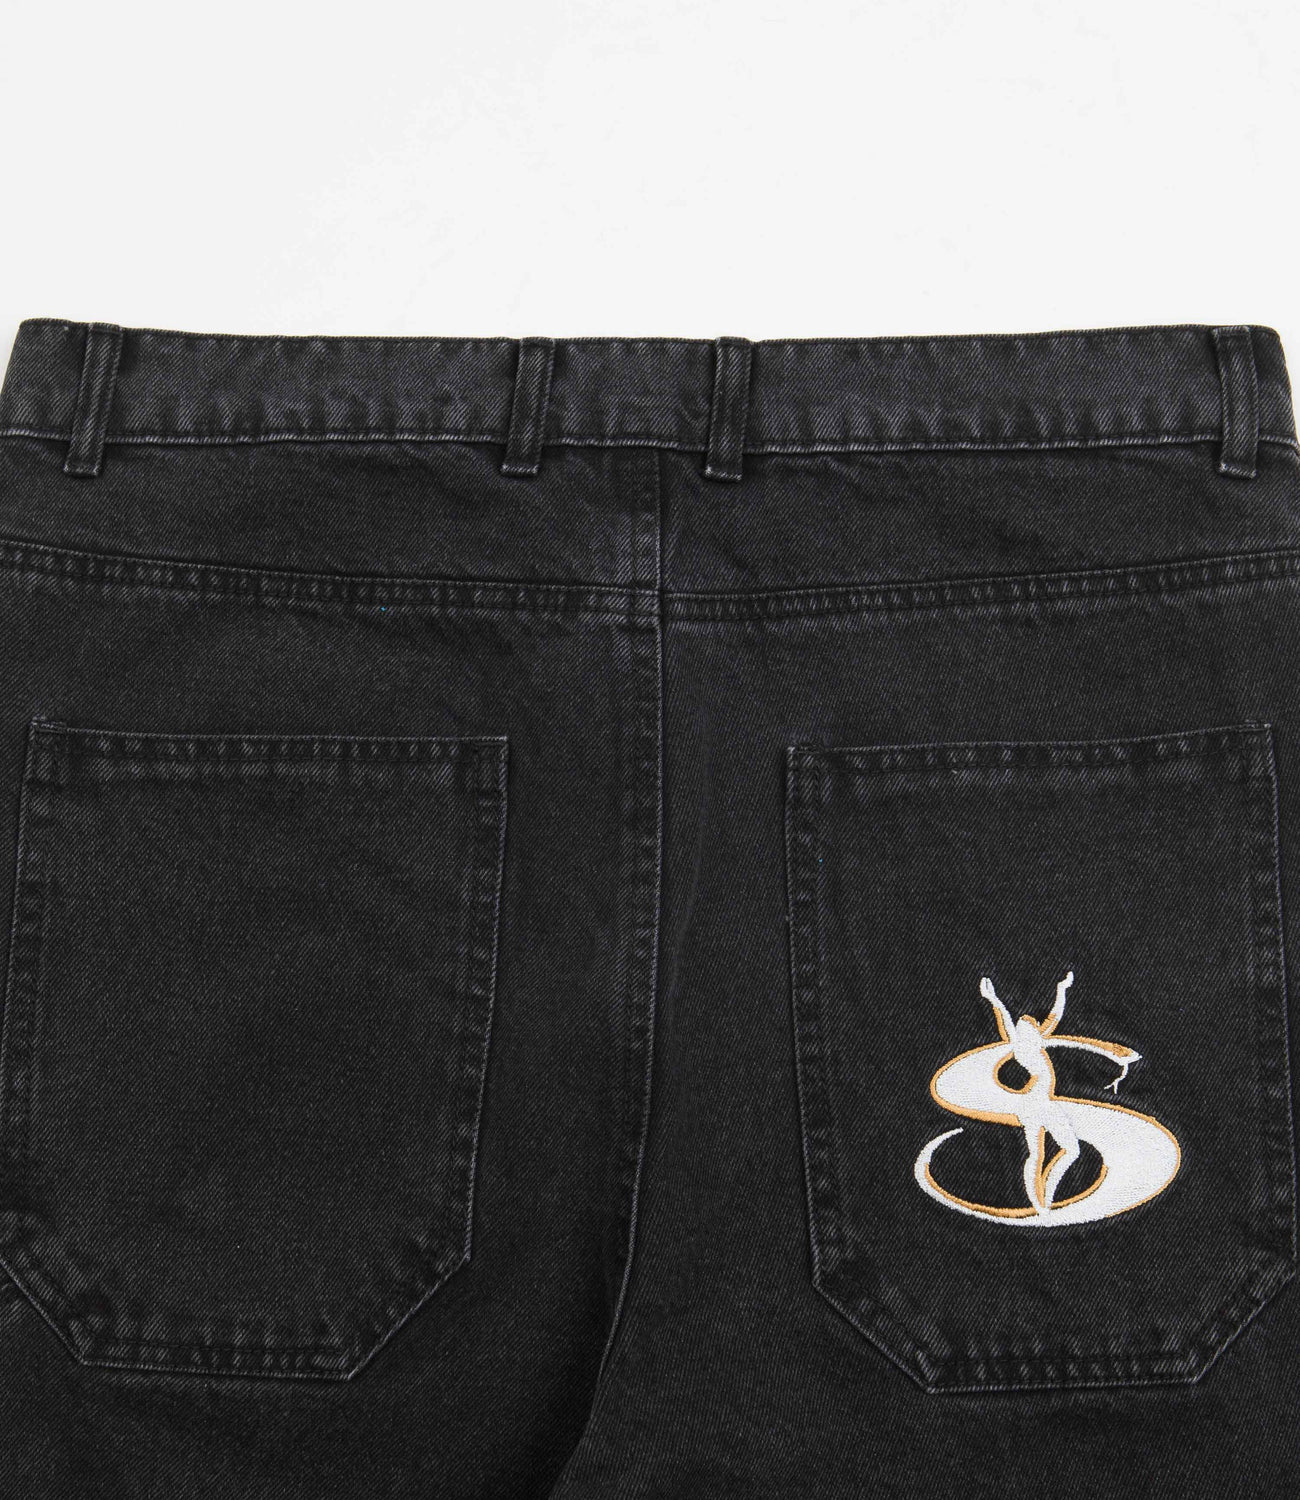 Yardsale Phantasy Jeans - Charcoal | Flatspot